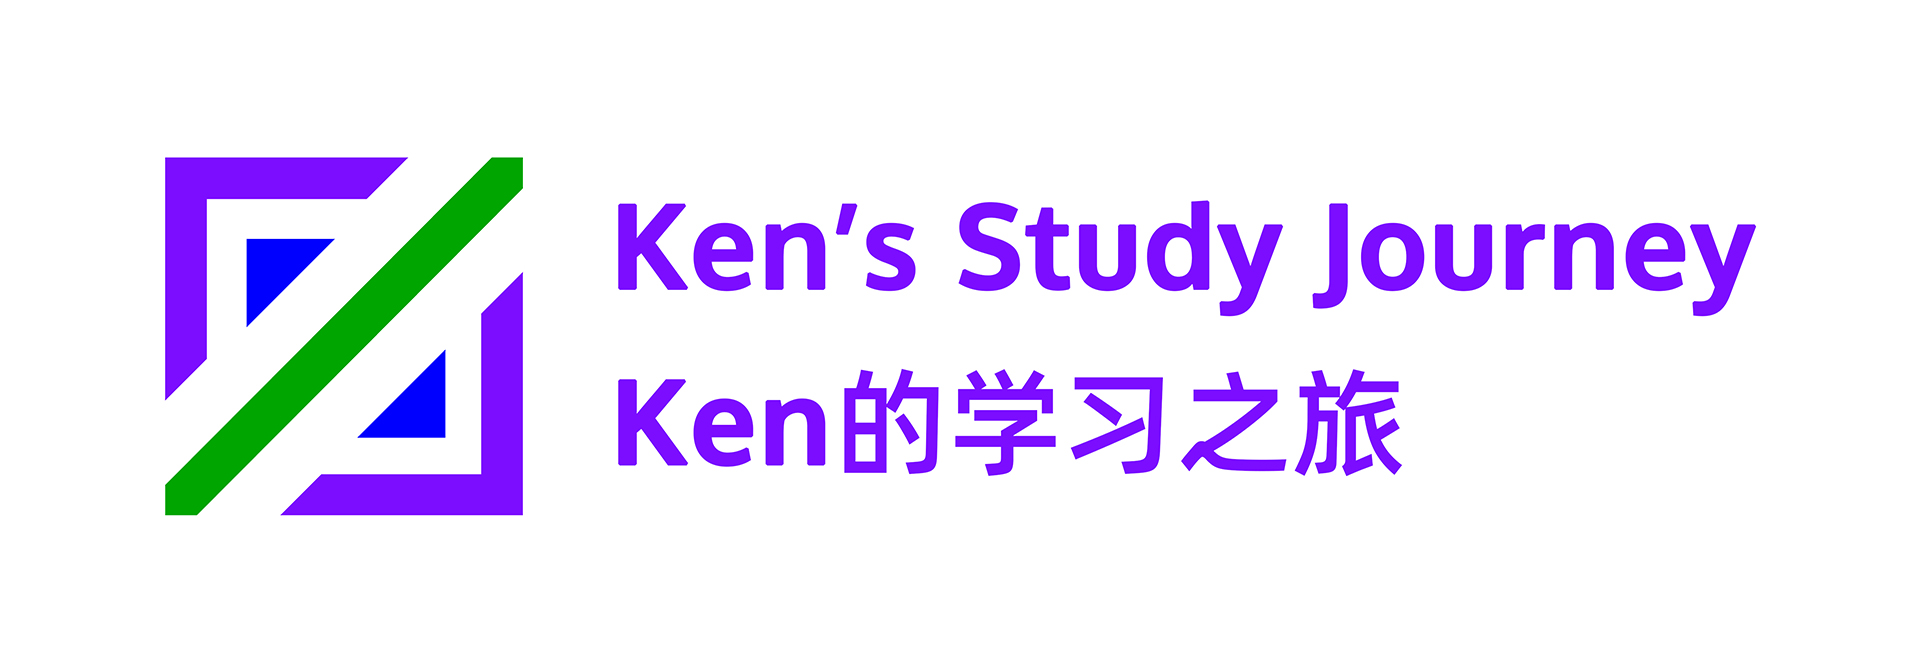 Ken's Study Journey Logo from 2021